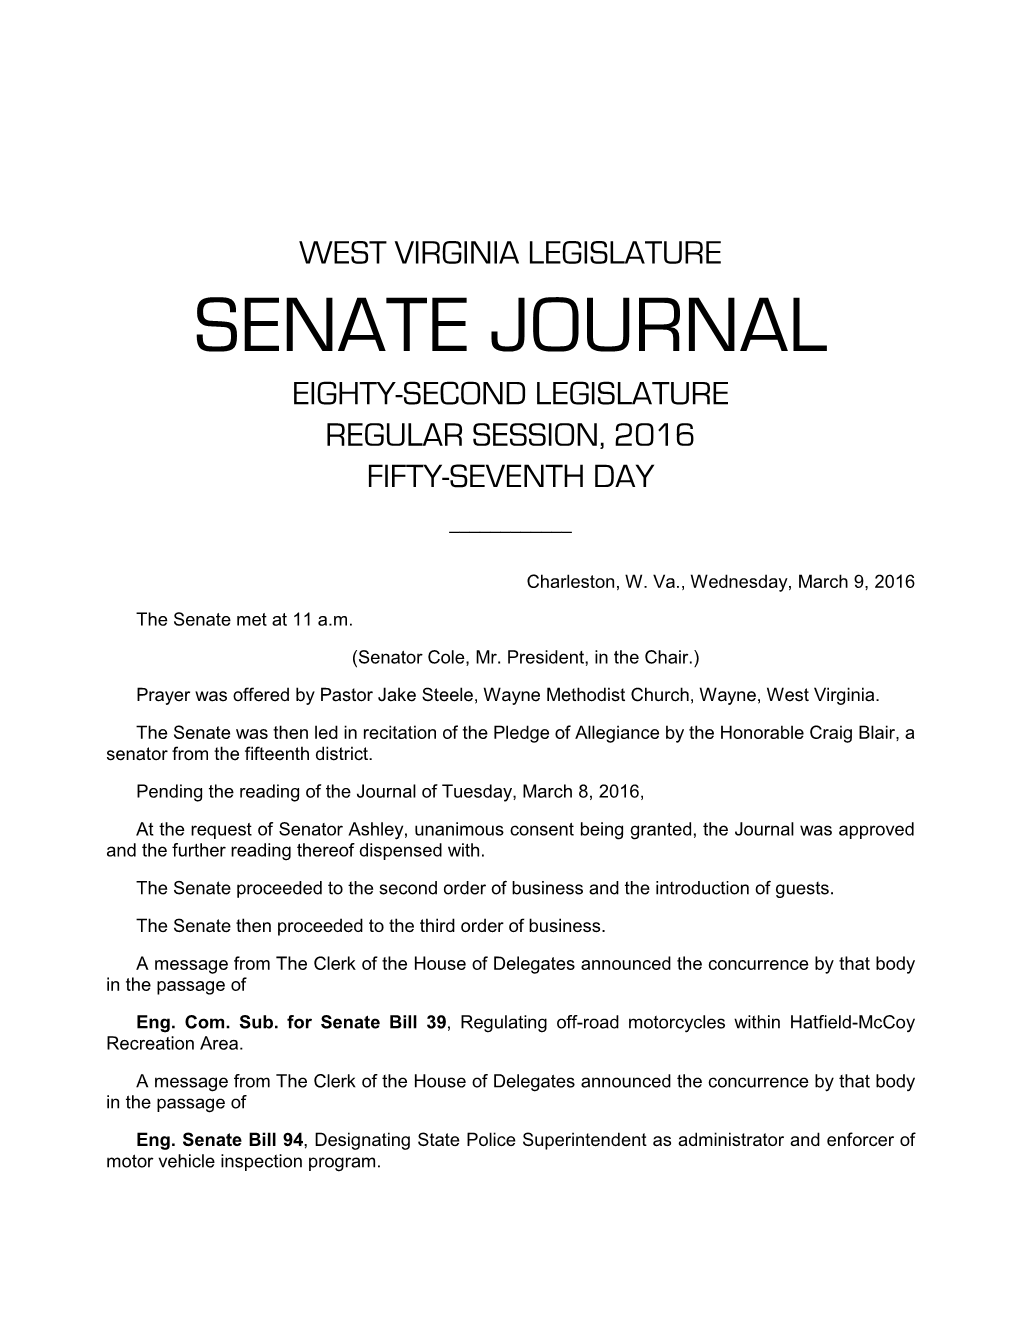 Senate Journal Eighty-Second Legislature Regular Session, 2016 Fifty-Seventh Day